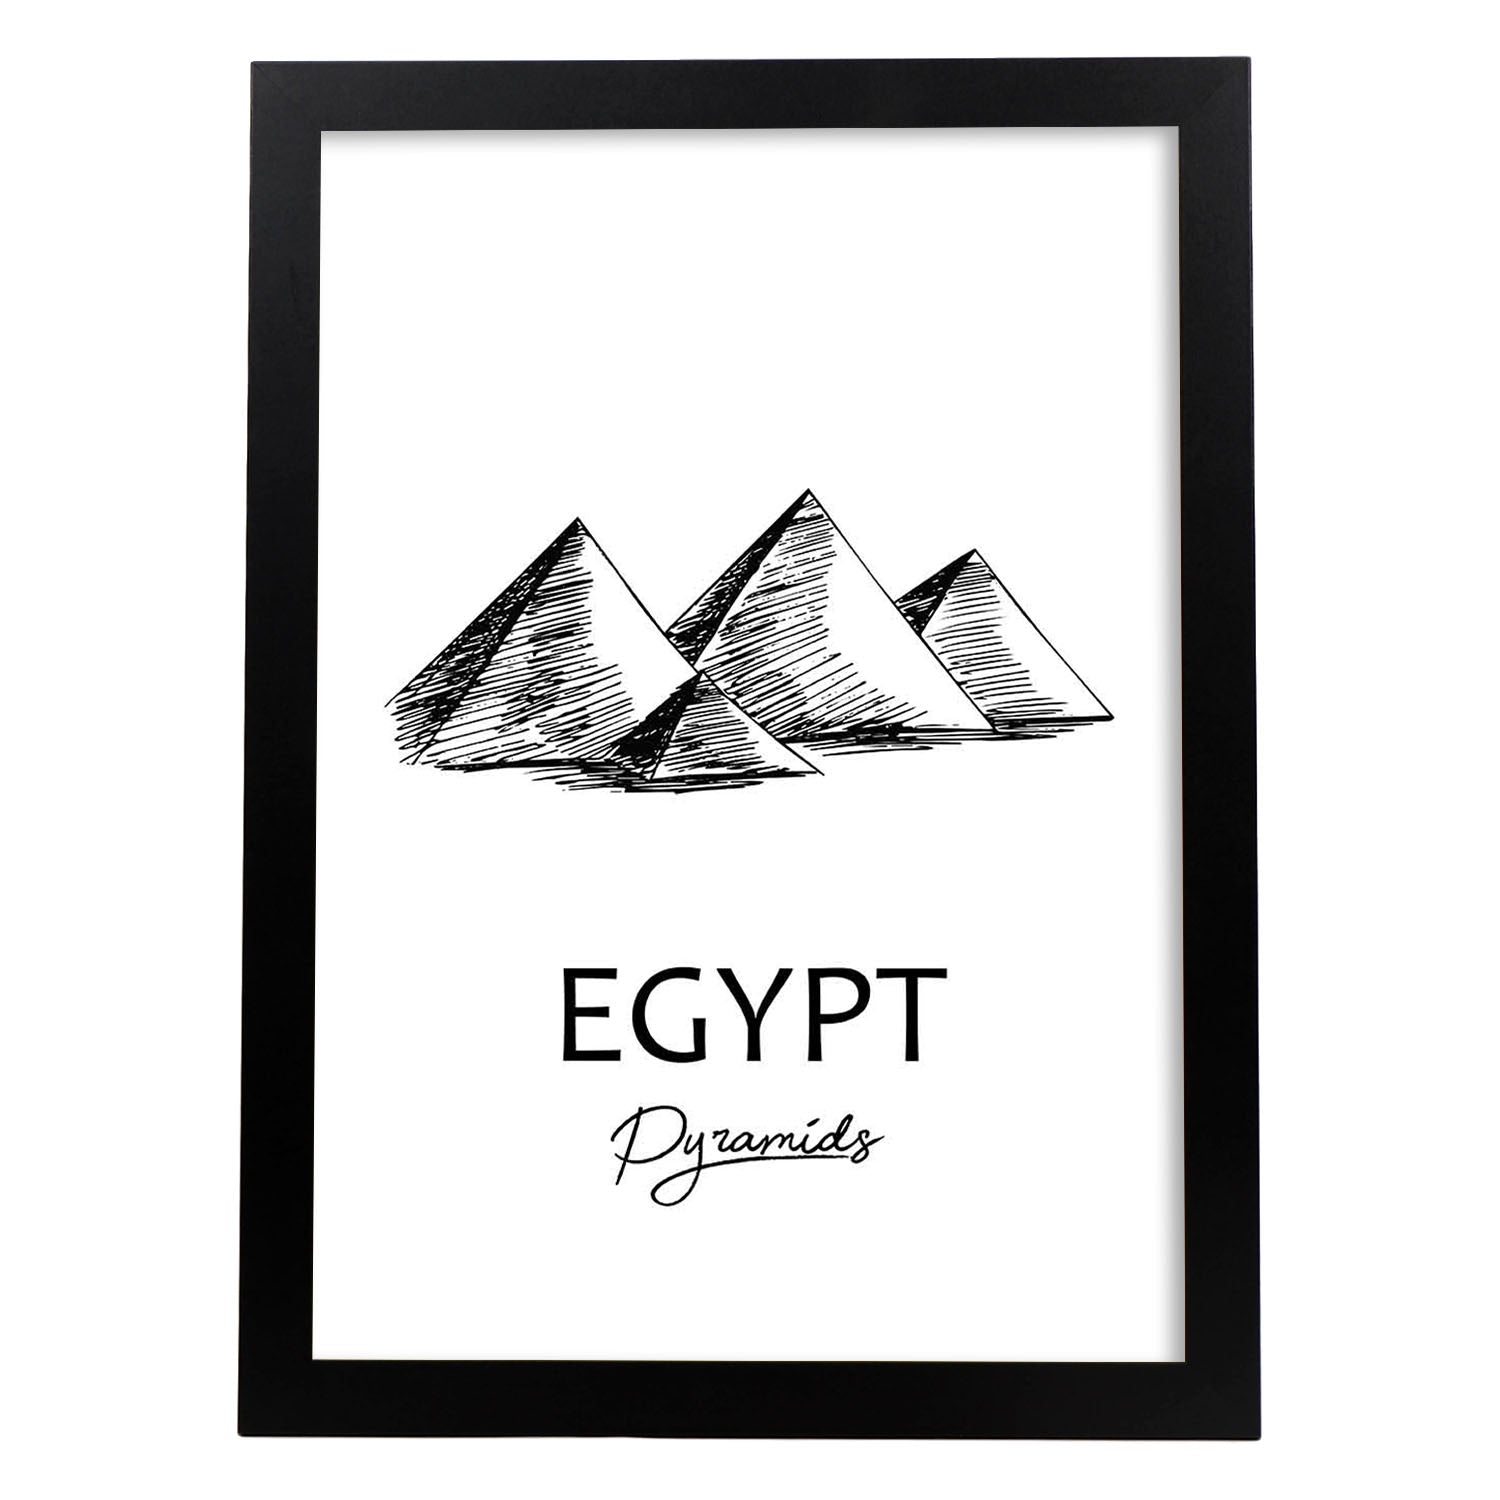 Poster de Egipto - Pirámides. Láminas con monumentos de ciudades.-Artwork-Nacnic-A4-Marco Negro-Nacnic Estudio SL